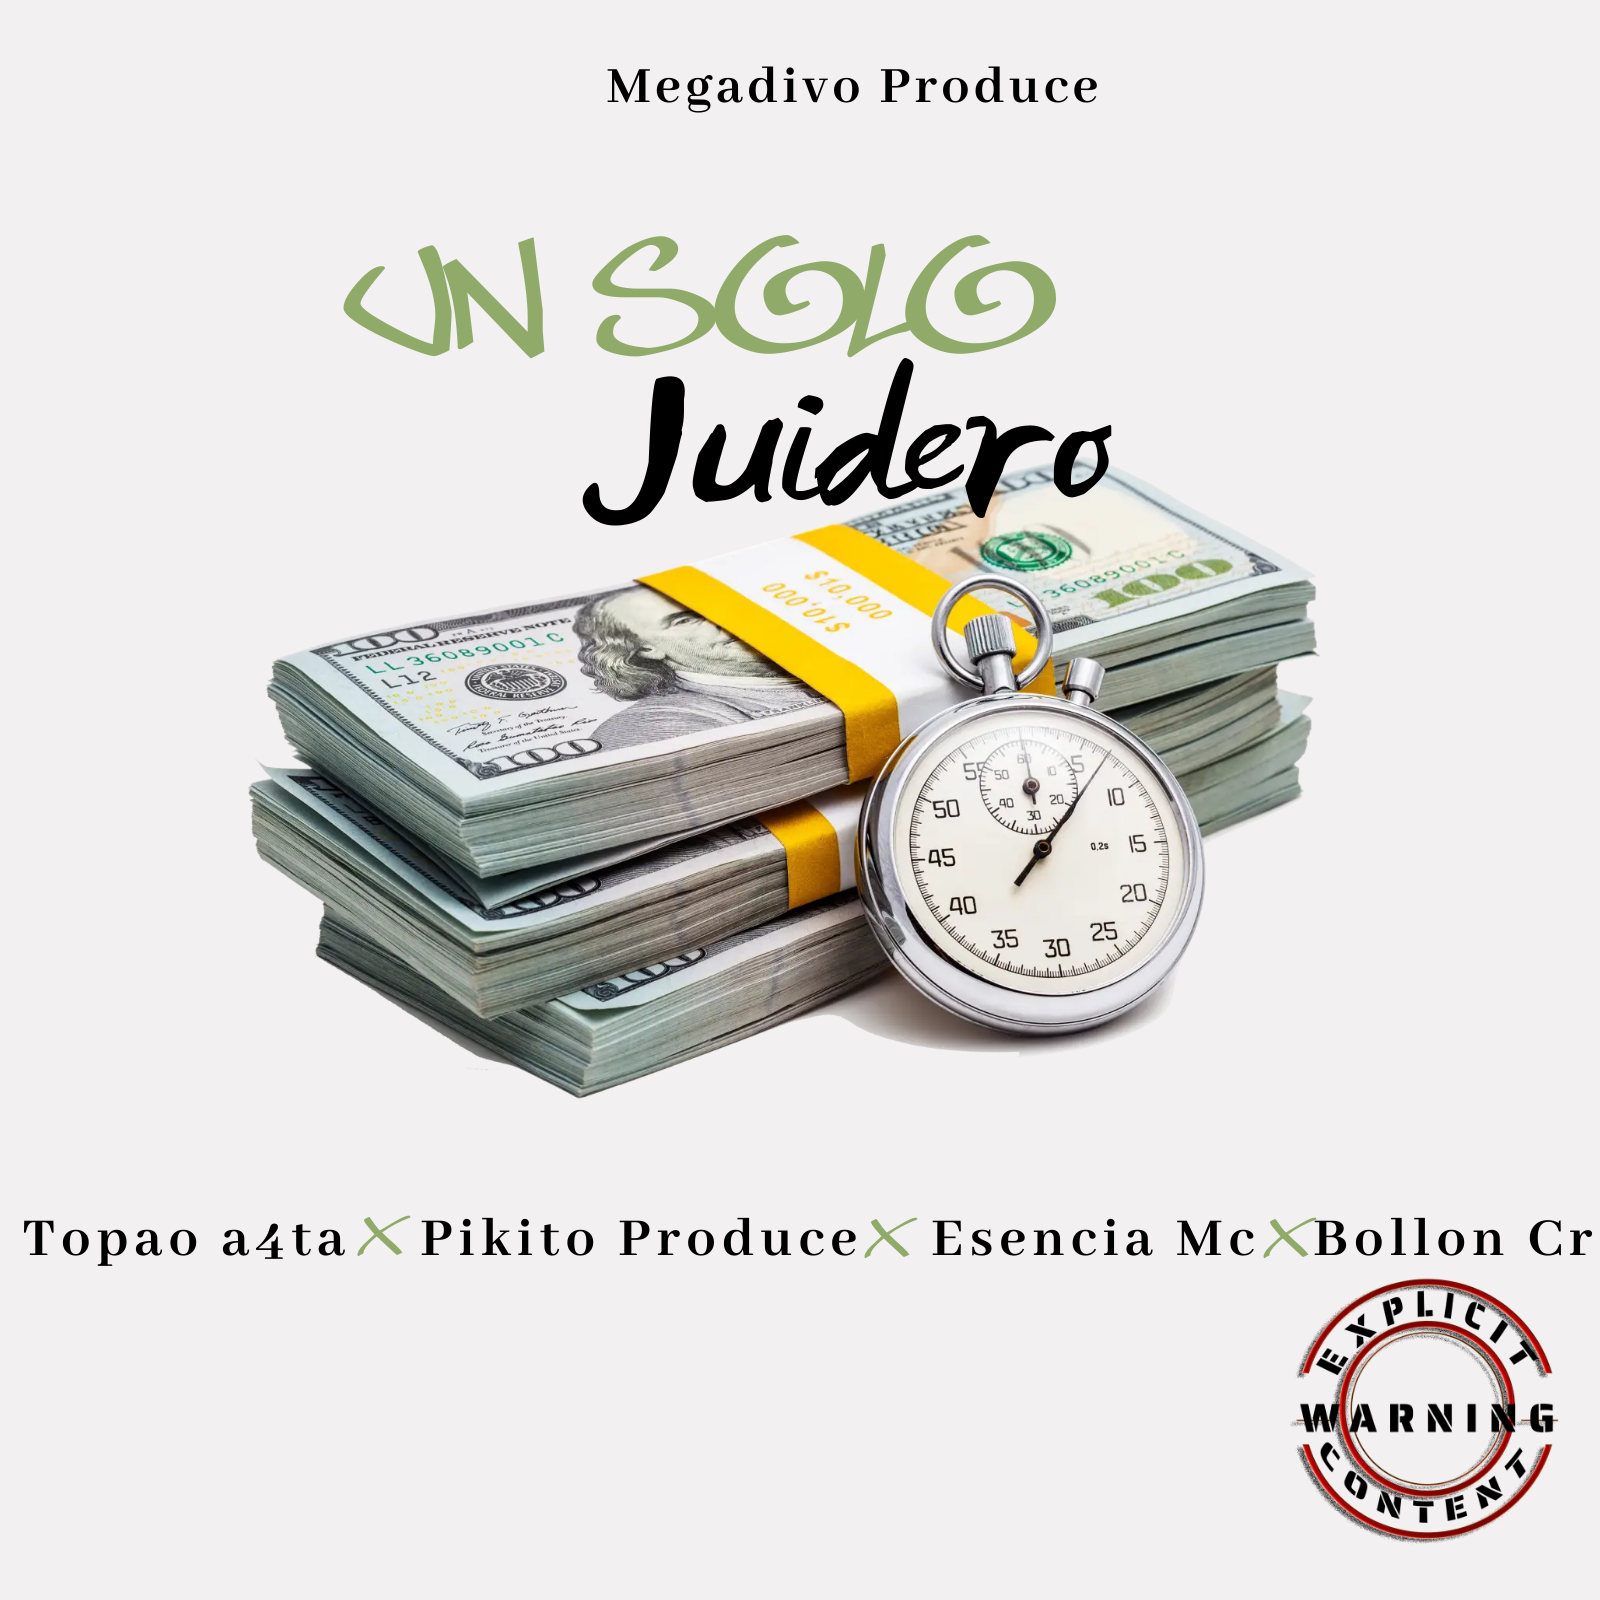 Megadivo Produce ft Bollon Cr, Pikito Produce, La Esencia MC & Topao A4ta - Un Solo Juidero (Prod By Megadivo Produce)